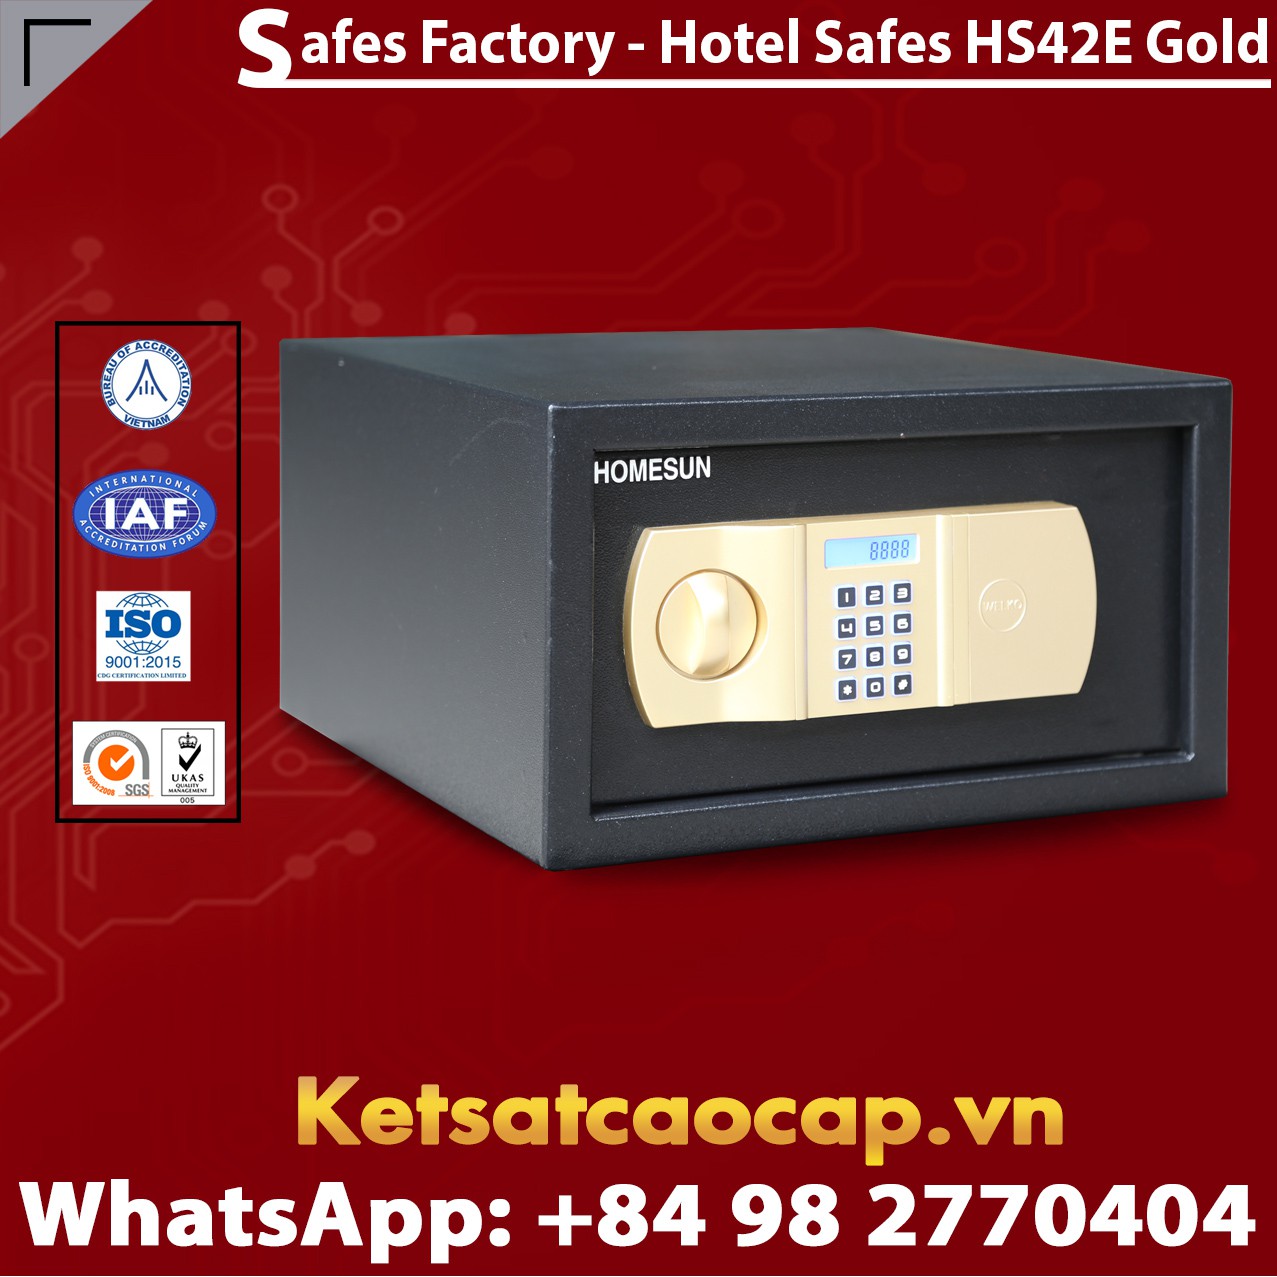 Hotel Safes HOMESUN HS42 E Gold